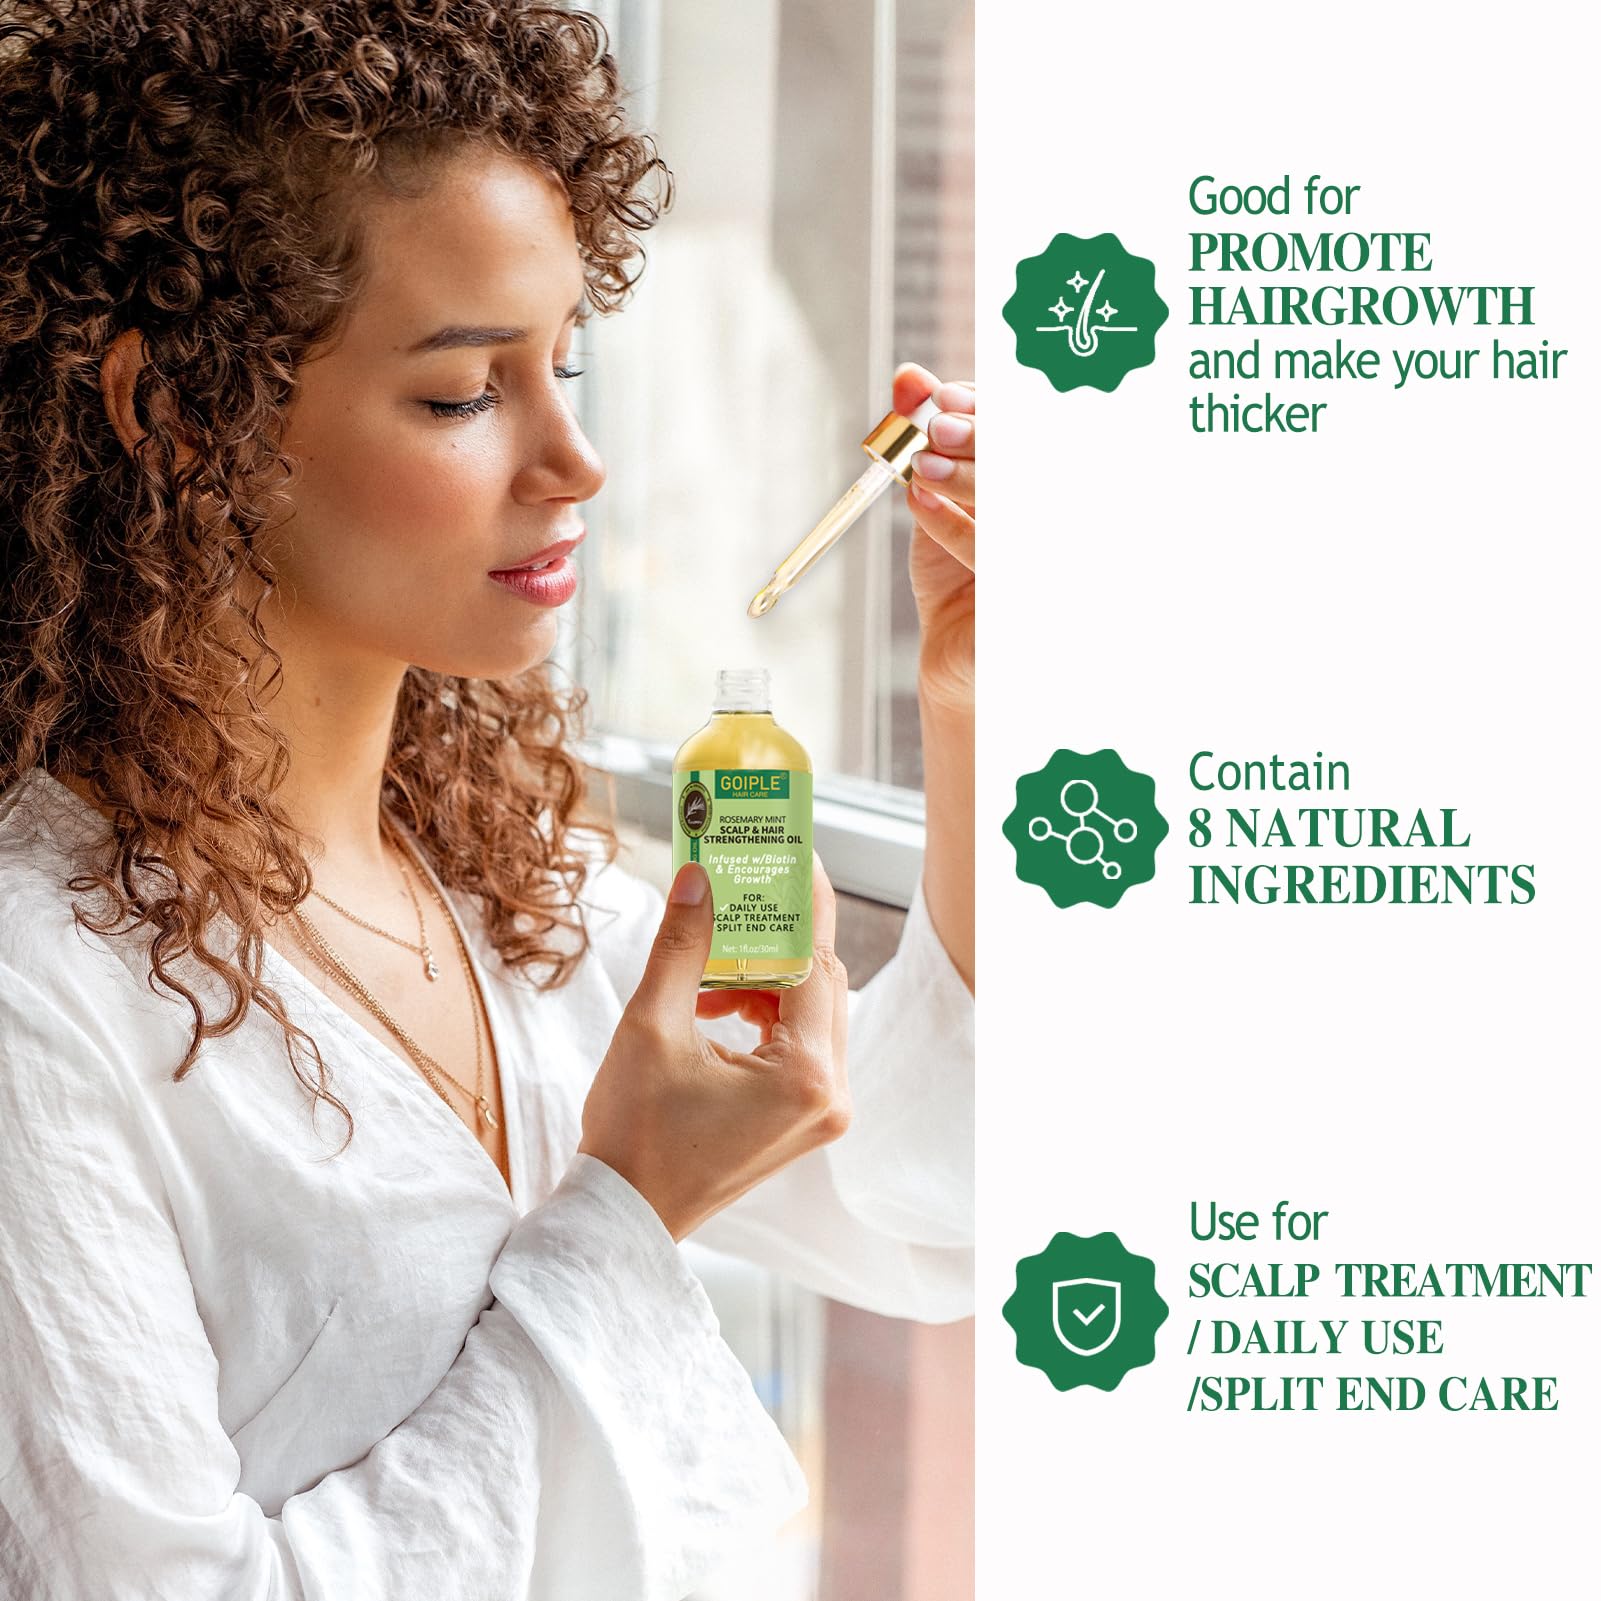 Organic Rosemary Oil For Hair Growth